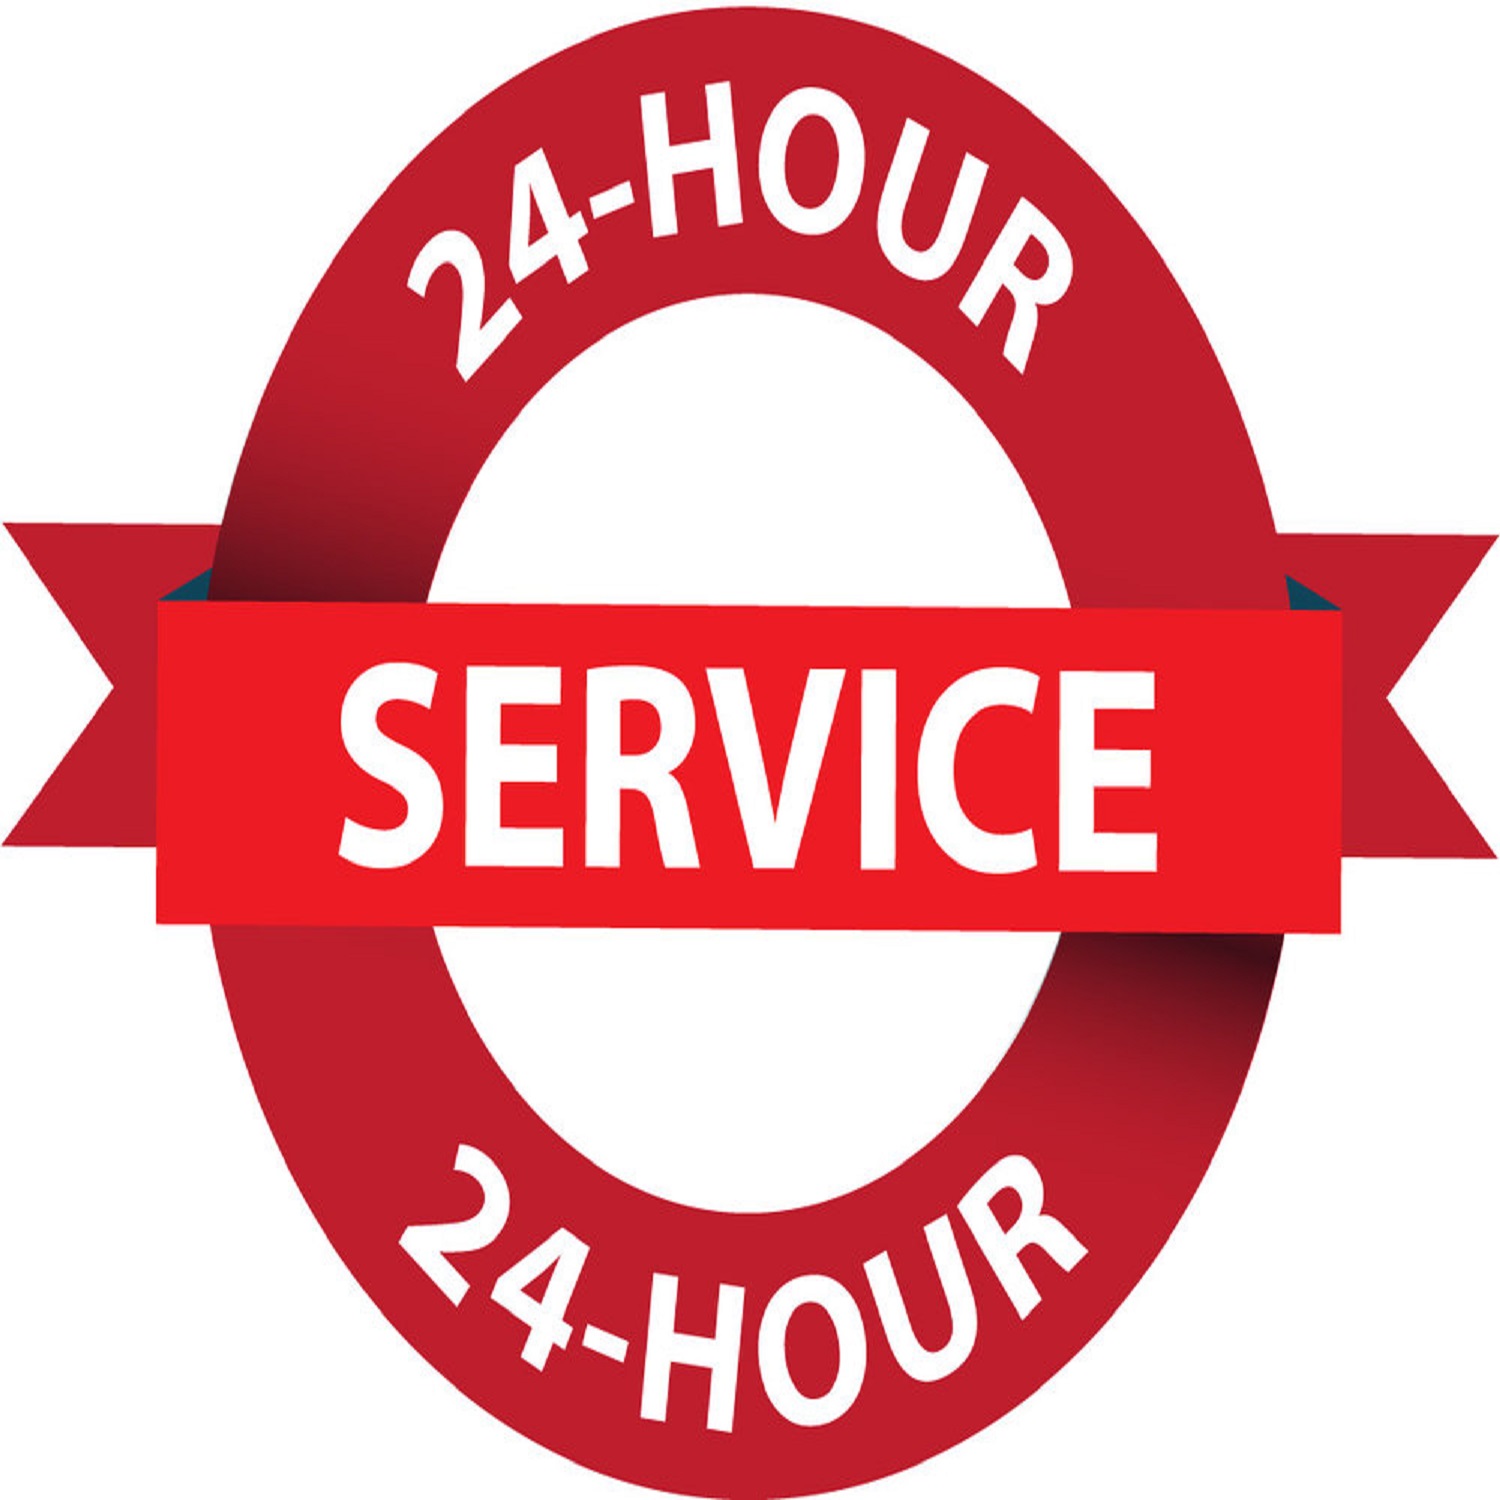 24+hour+service square 1500 pixils.jpg